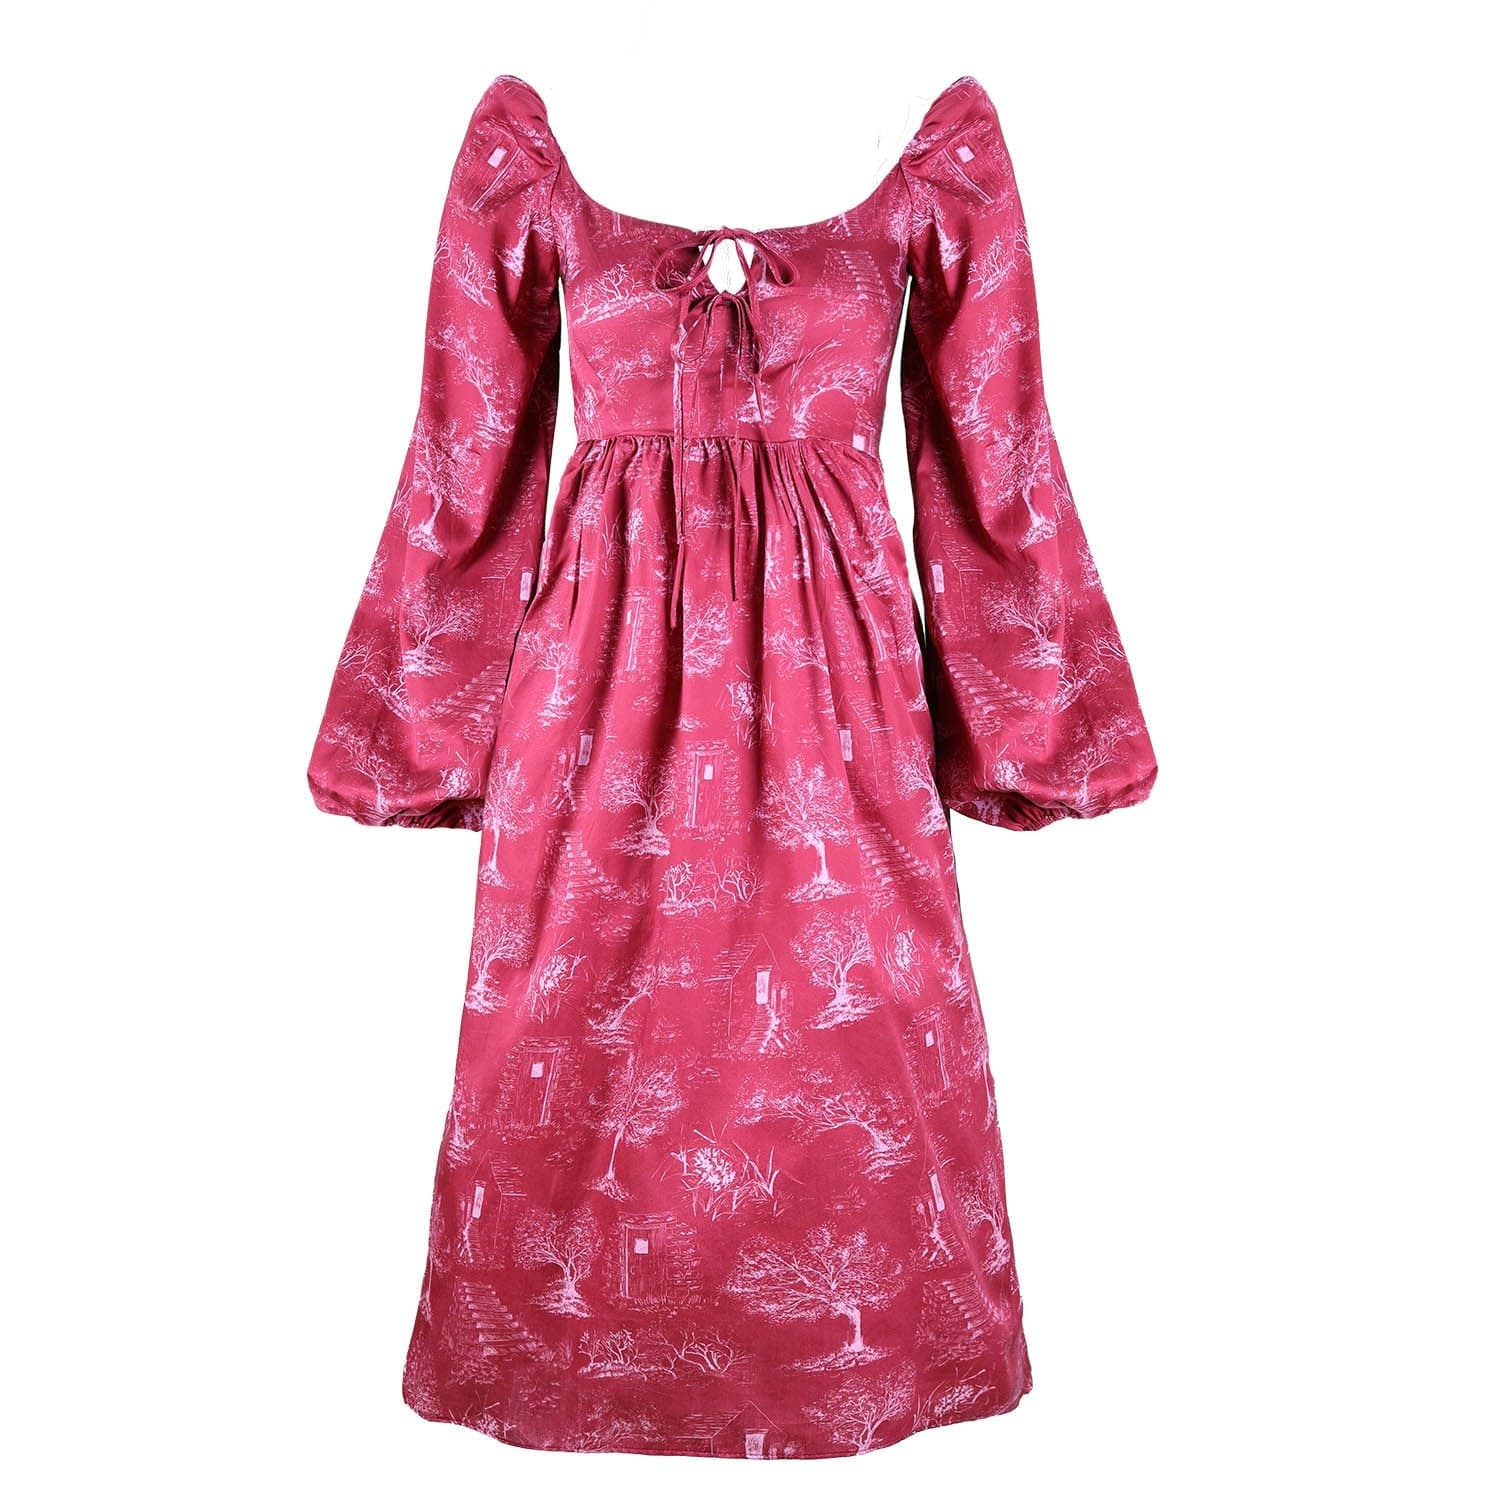 Onirik Dress Marcela Dress / Ruby Red + Alabaster Toile Cotton